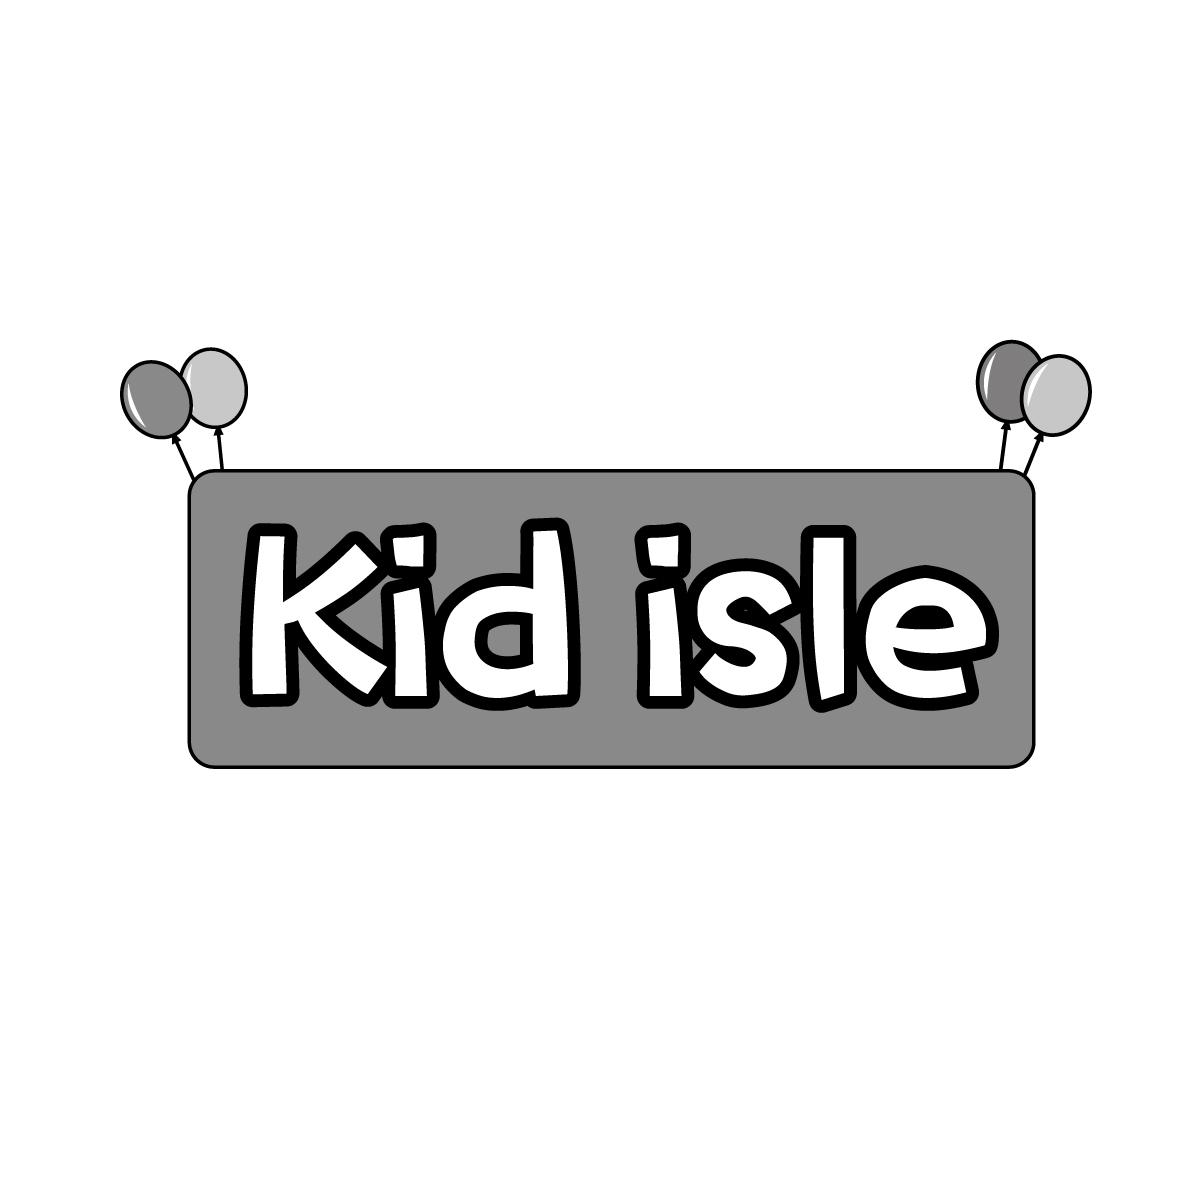 05类-医药保健KID ISLE商标转让